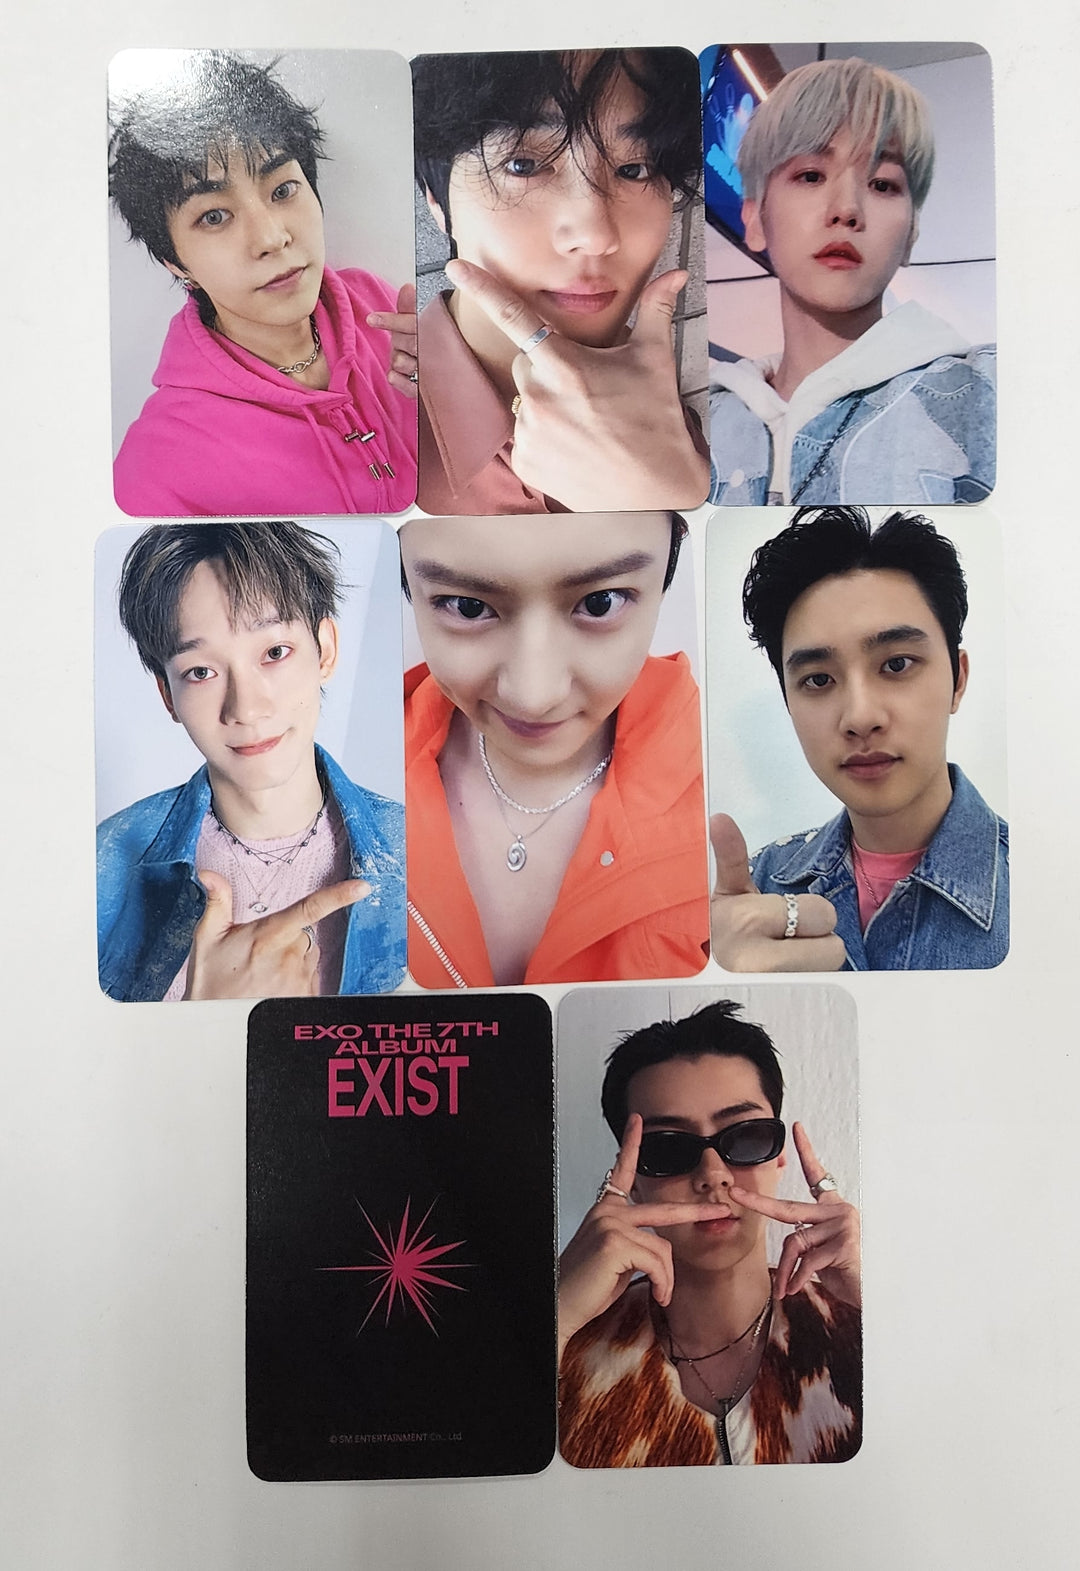 EXO「EXIST」 - Apple Musicプレオーダー特典フォトカード